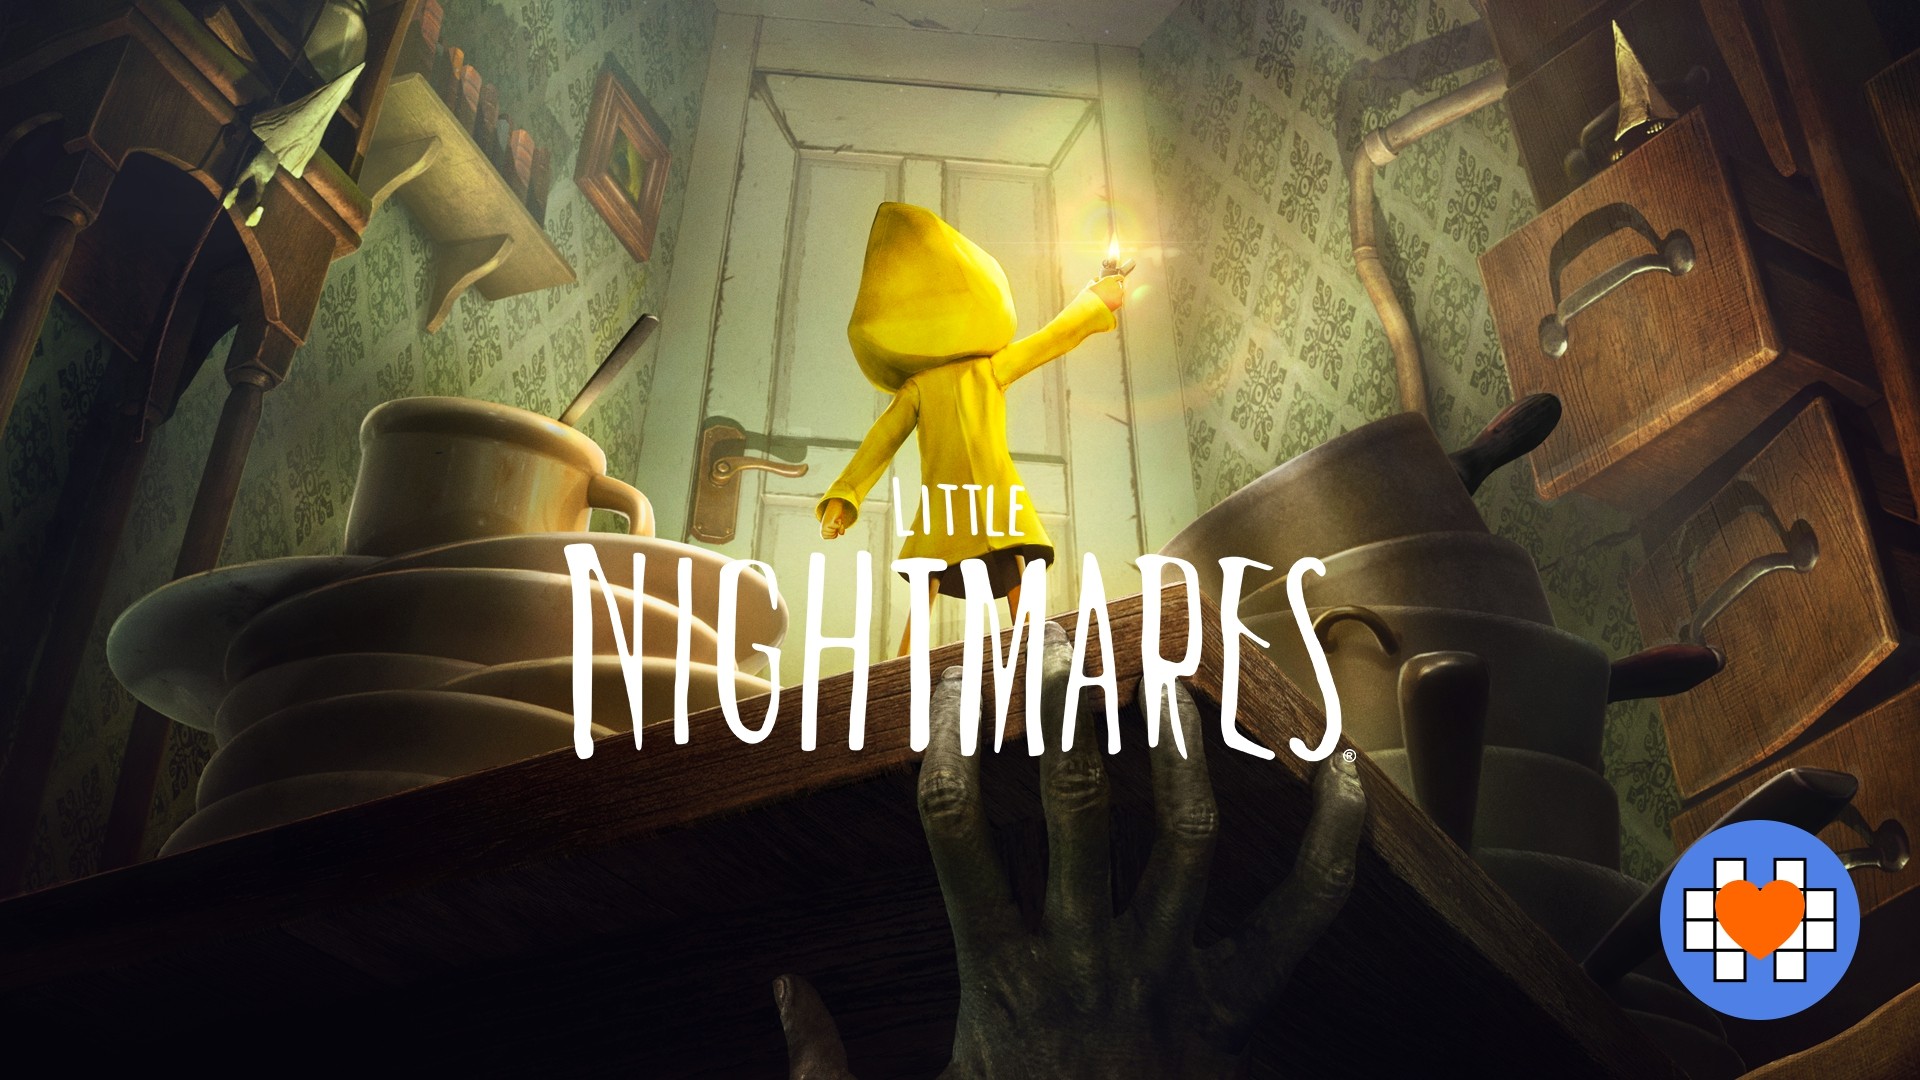 How long is Little Nightmares II?